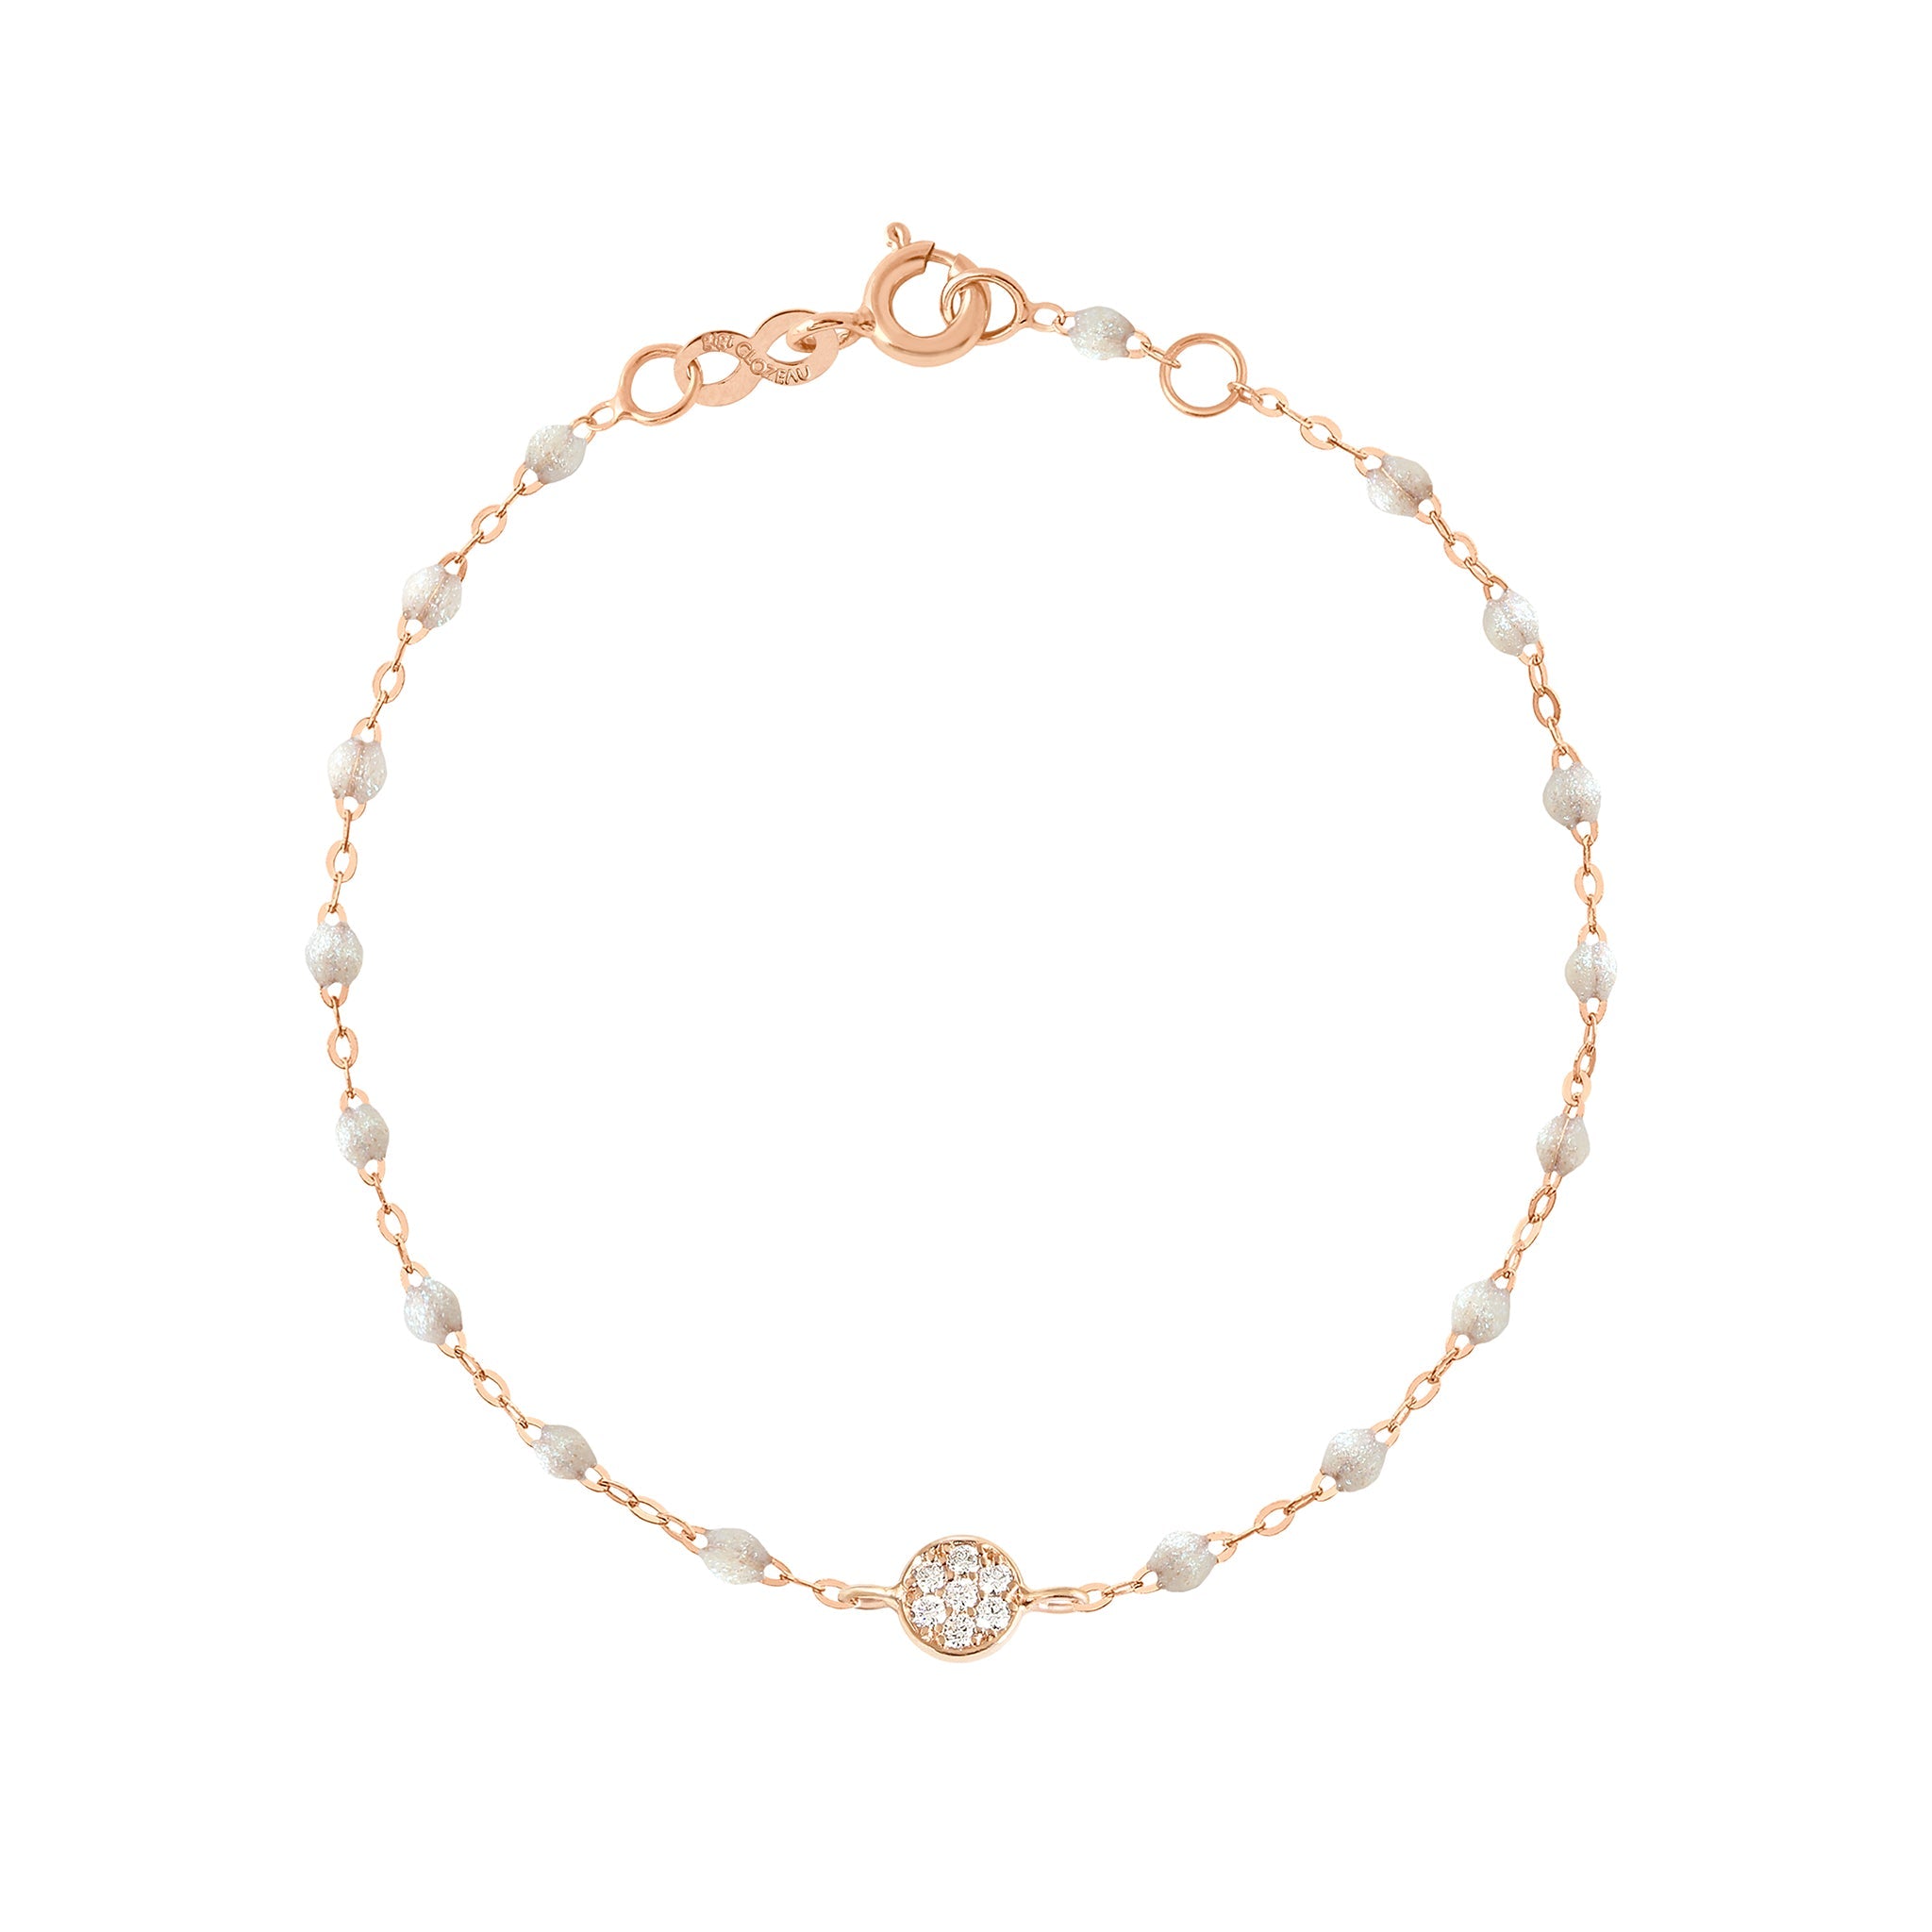 Bracelet opale Puce diamants, or rose, 17 cm pirate Référence :  b3pu002r6117di -1